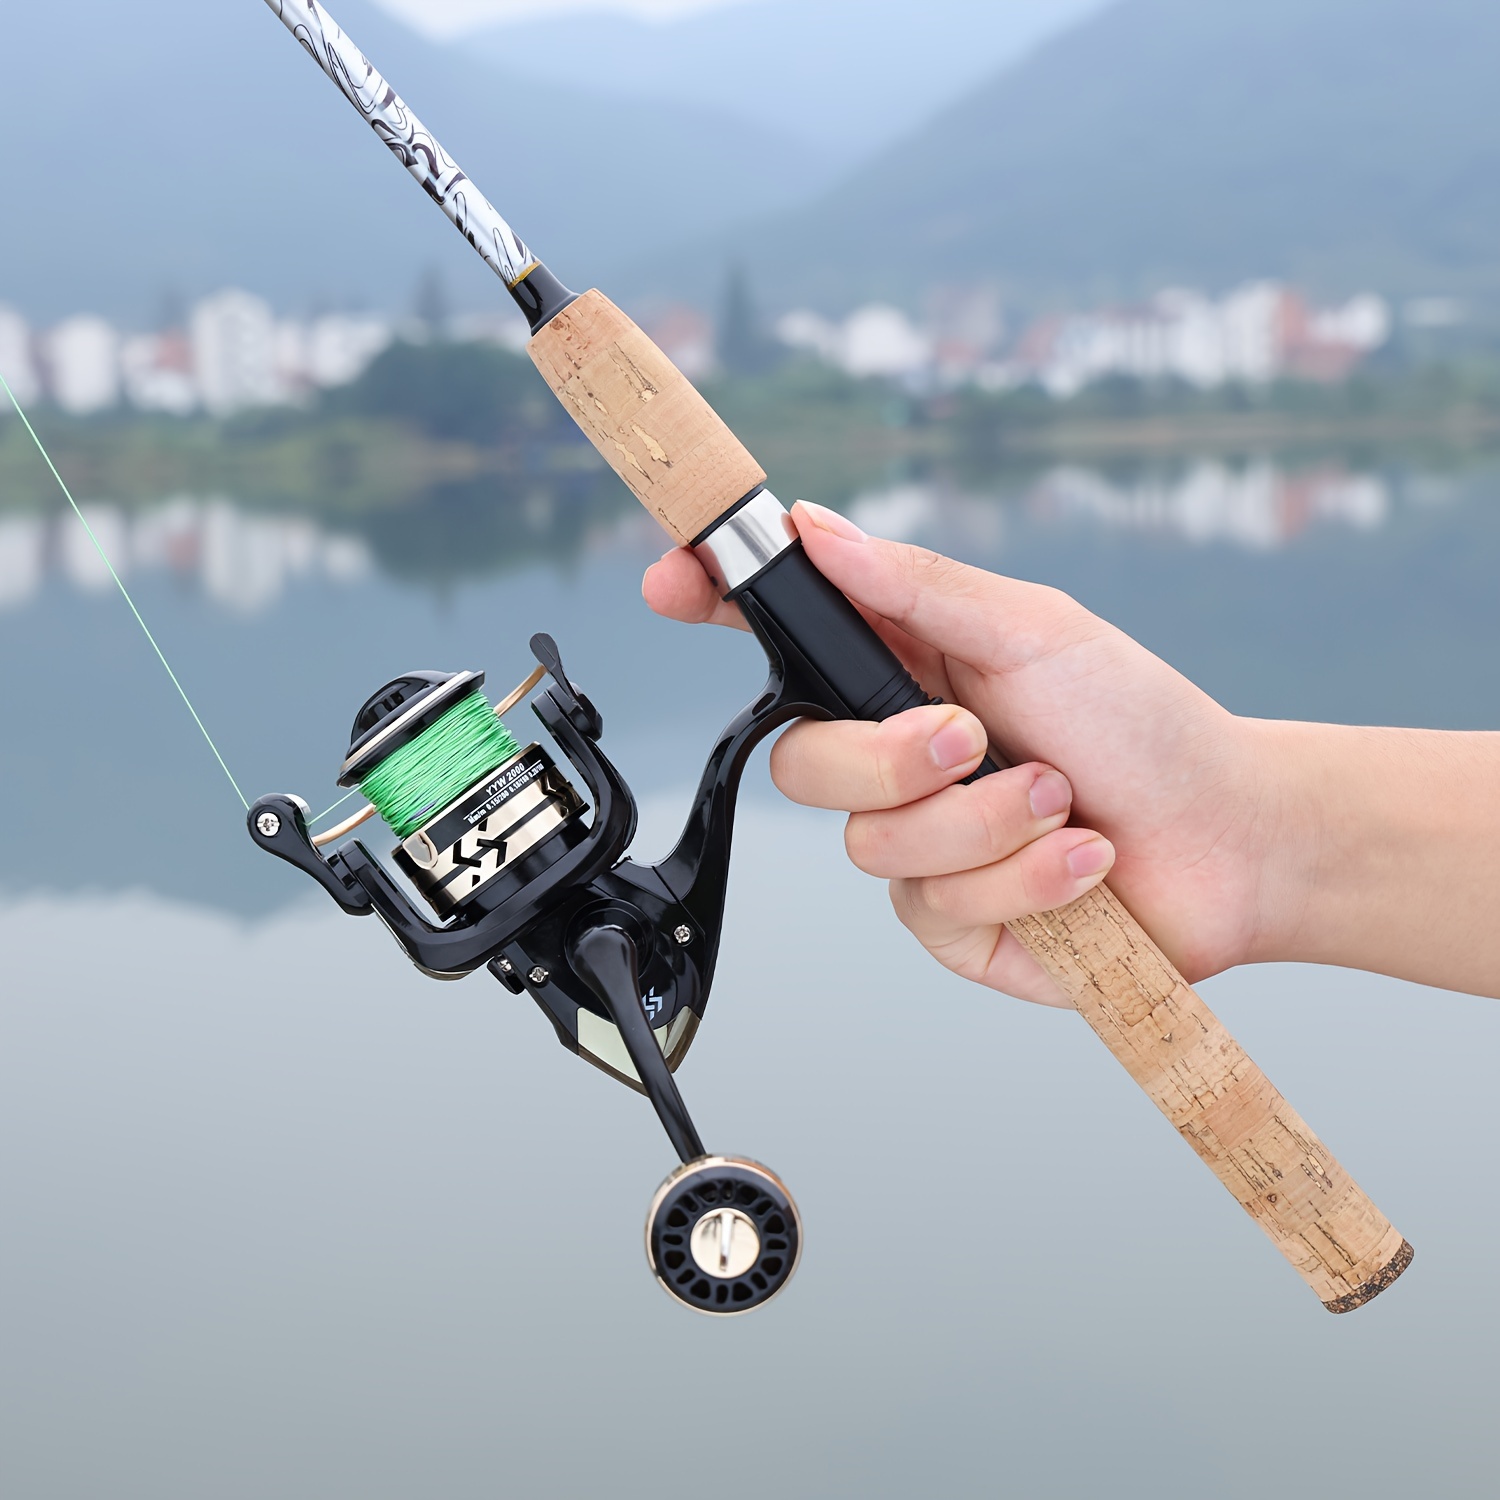 Sougayilang Baitcaster Combo Fishing Rod and Reel Full Set (1.8M